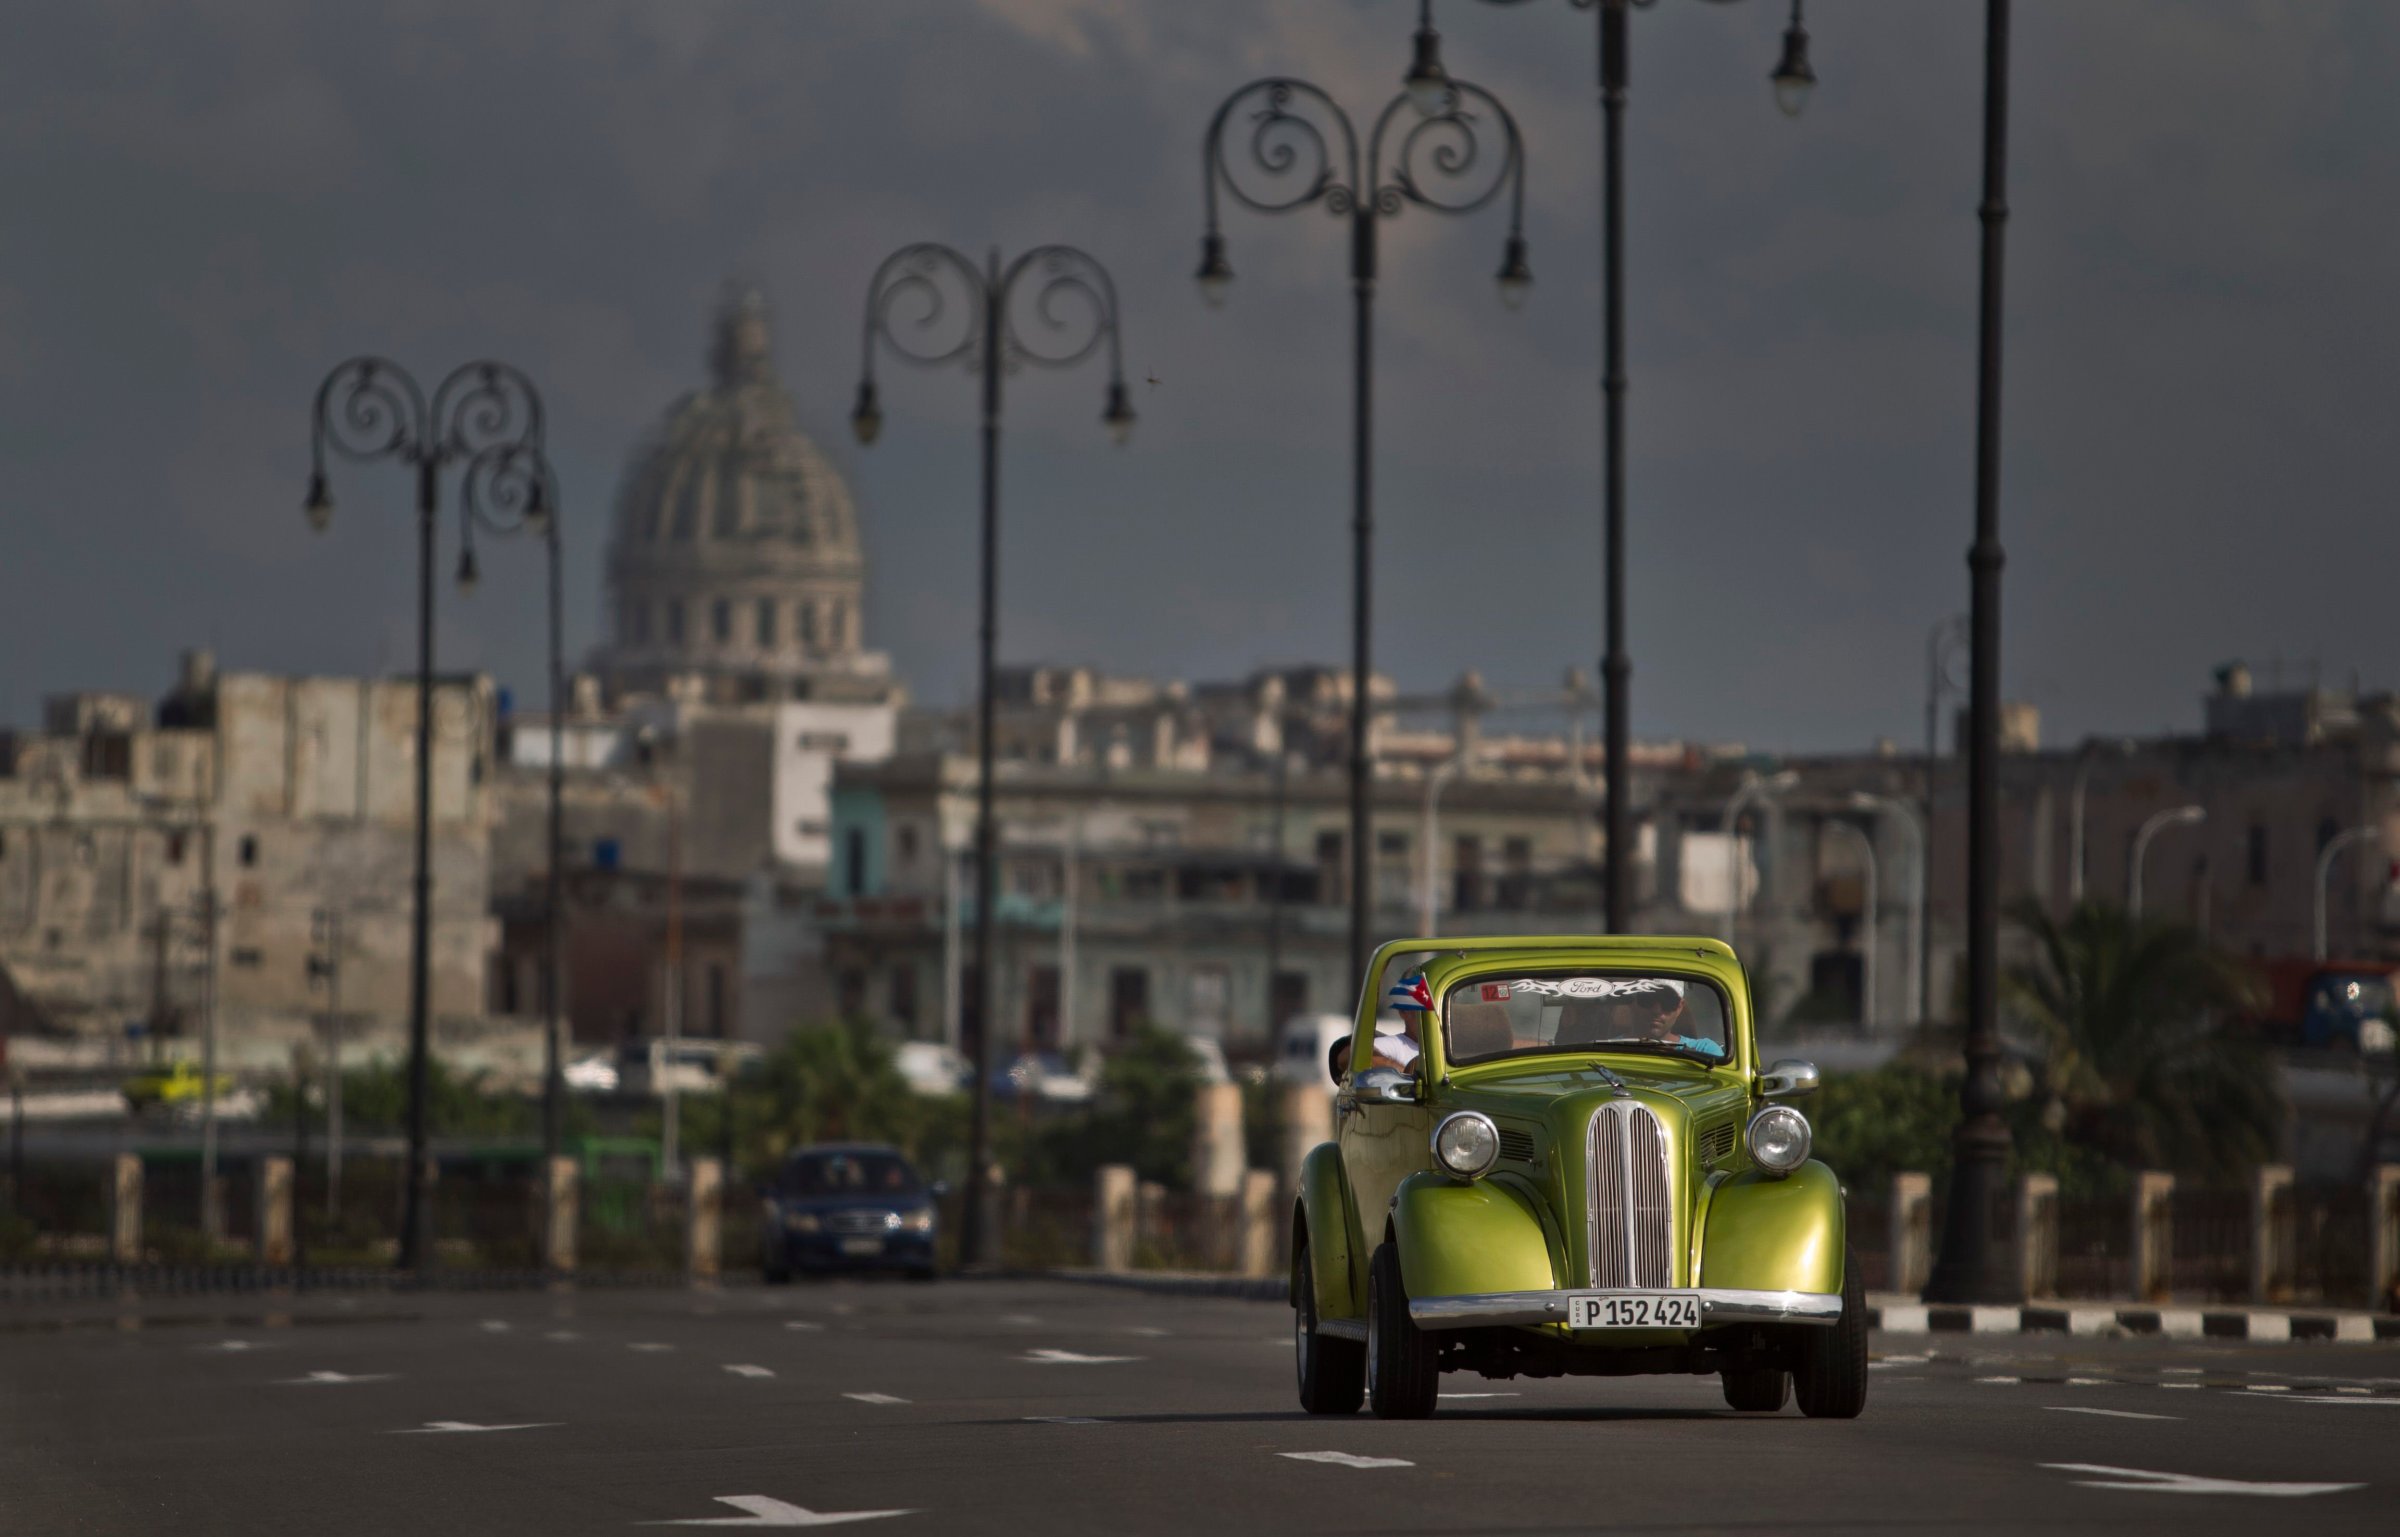 APTOPIX Cuba Classic Cars Photo Gallery